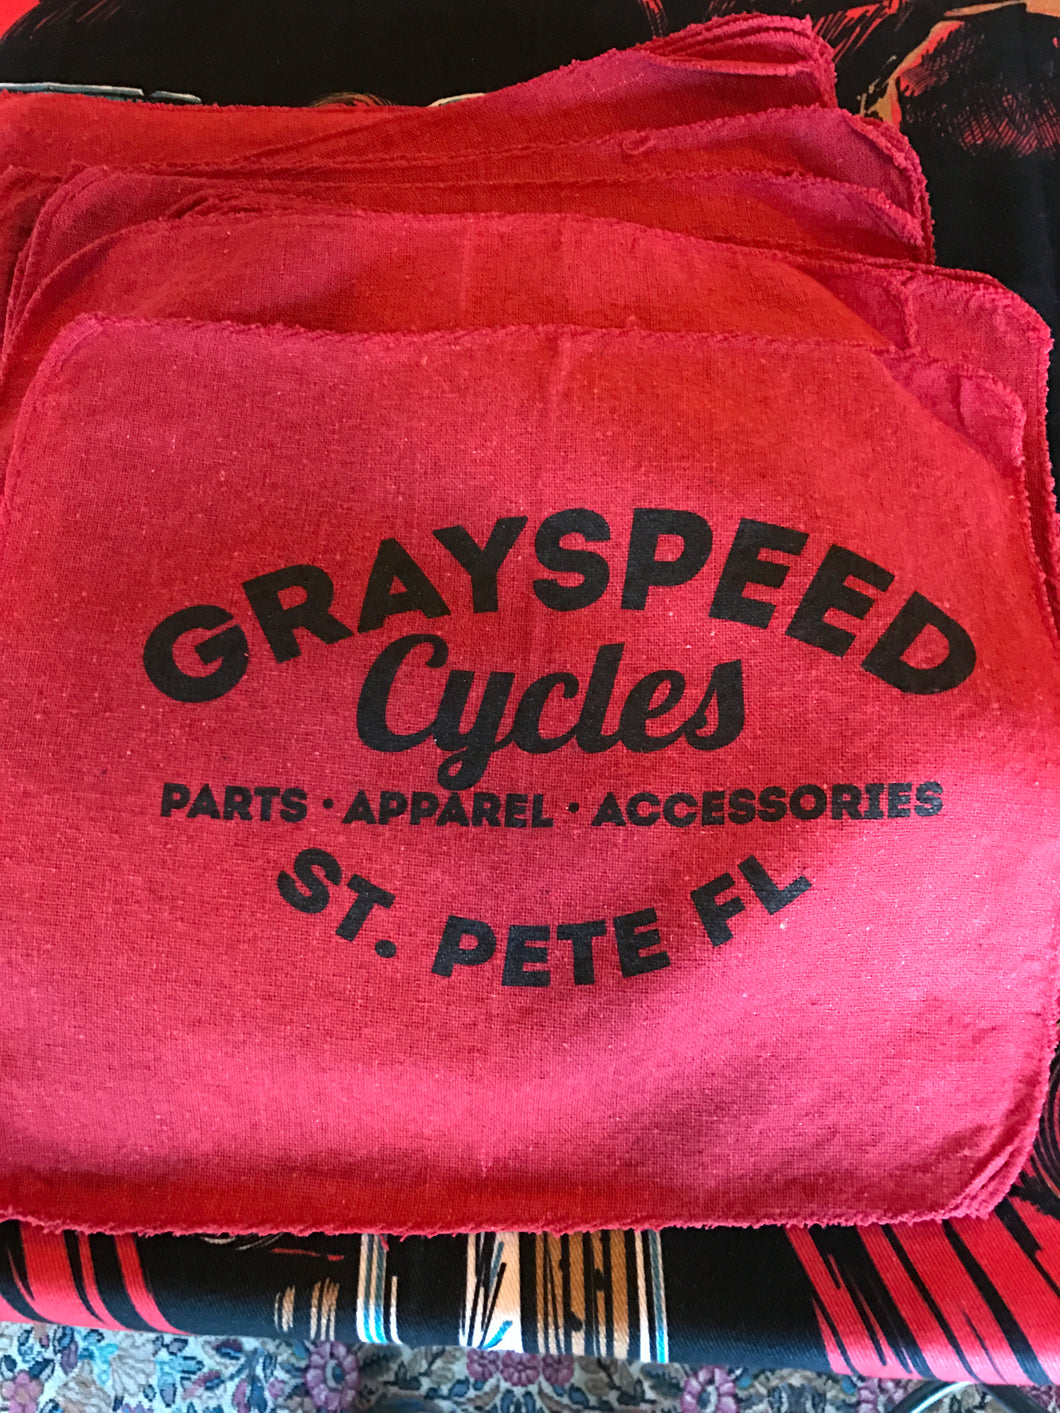 Grayspeed Cycles Shop Rag